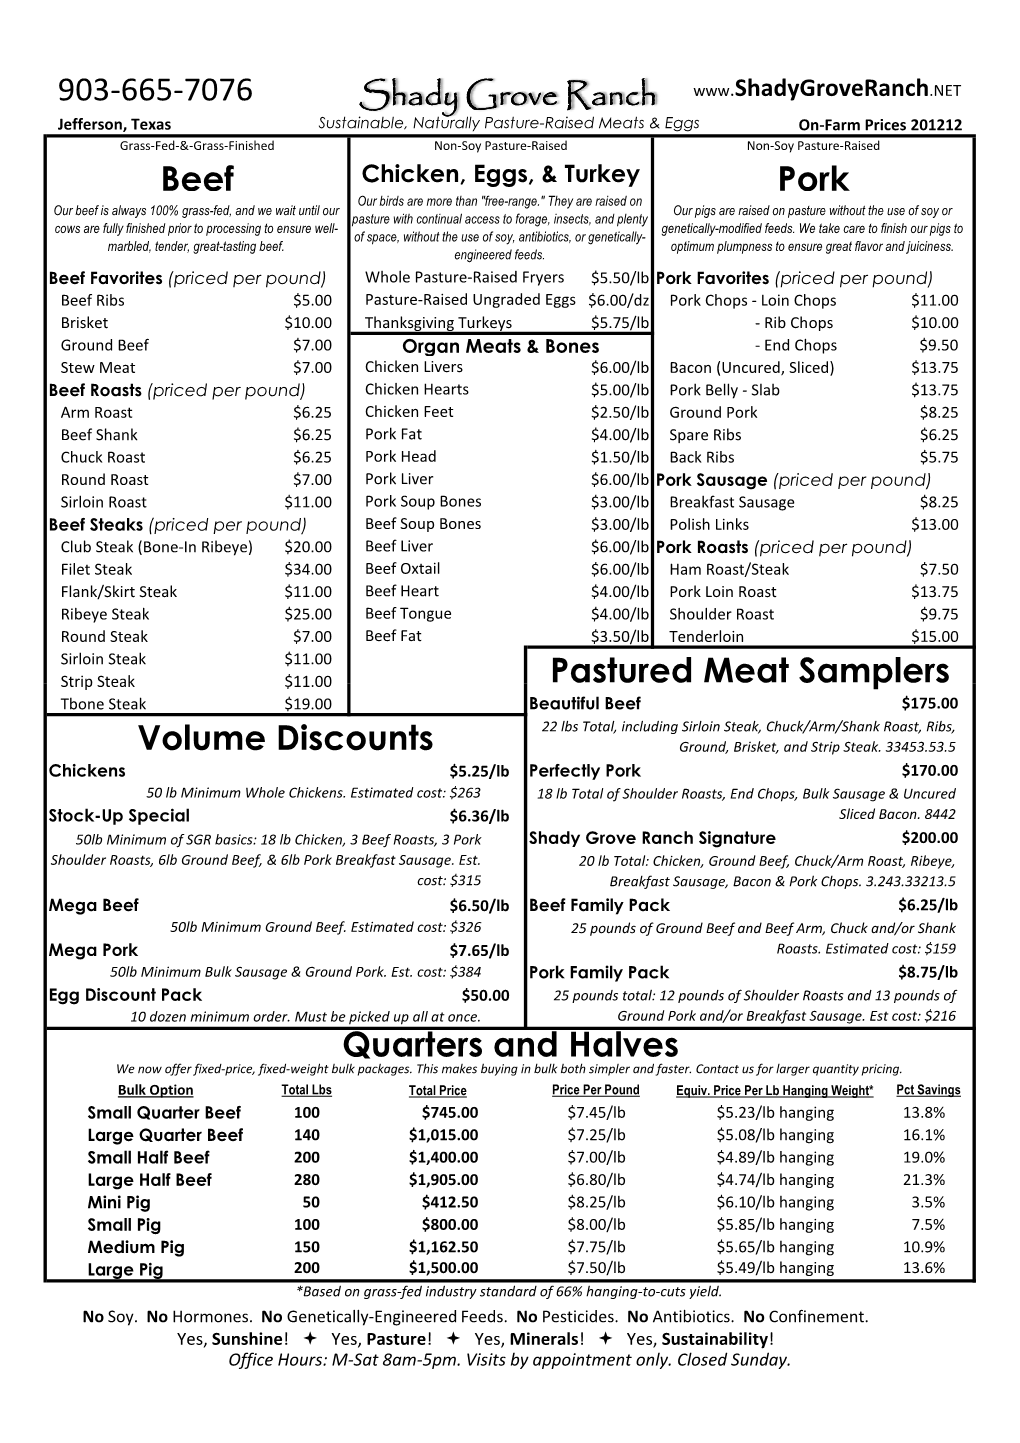 201210 Meat Sampler Price Worksheet